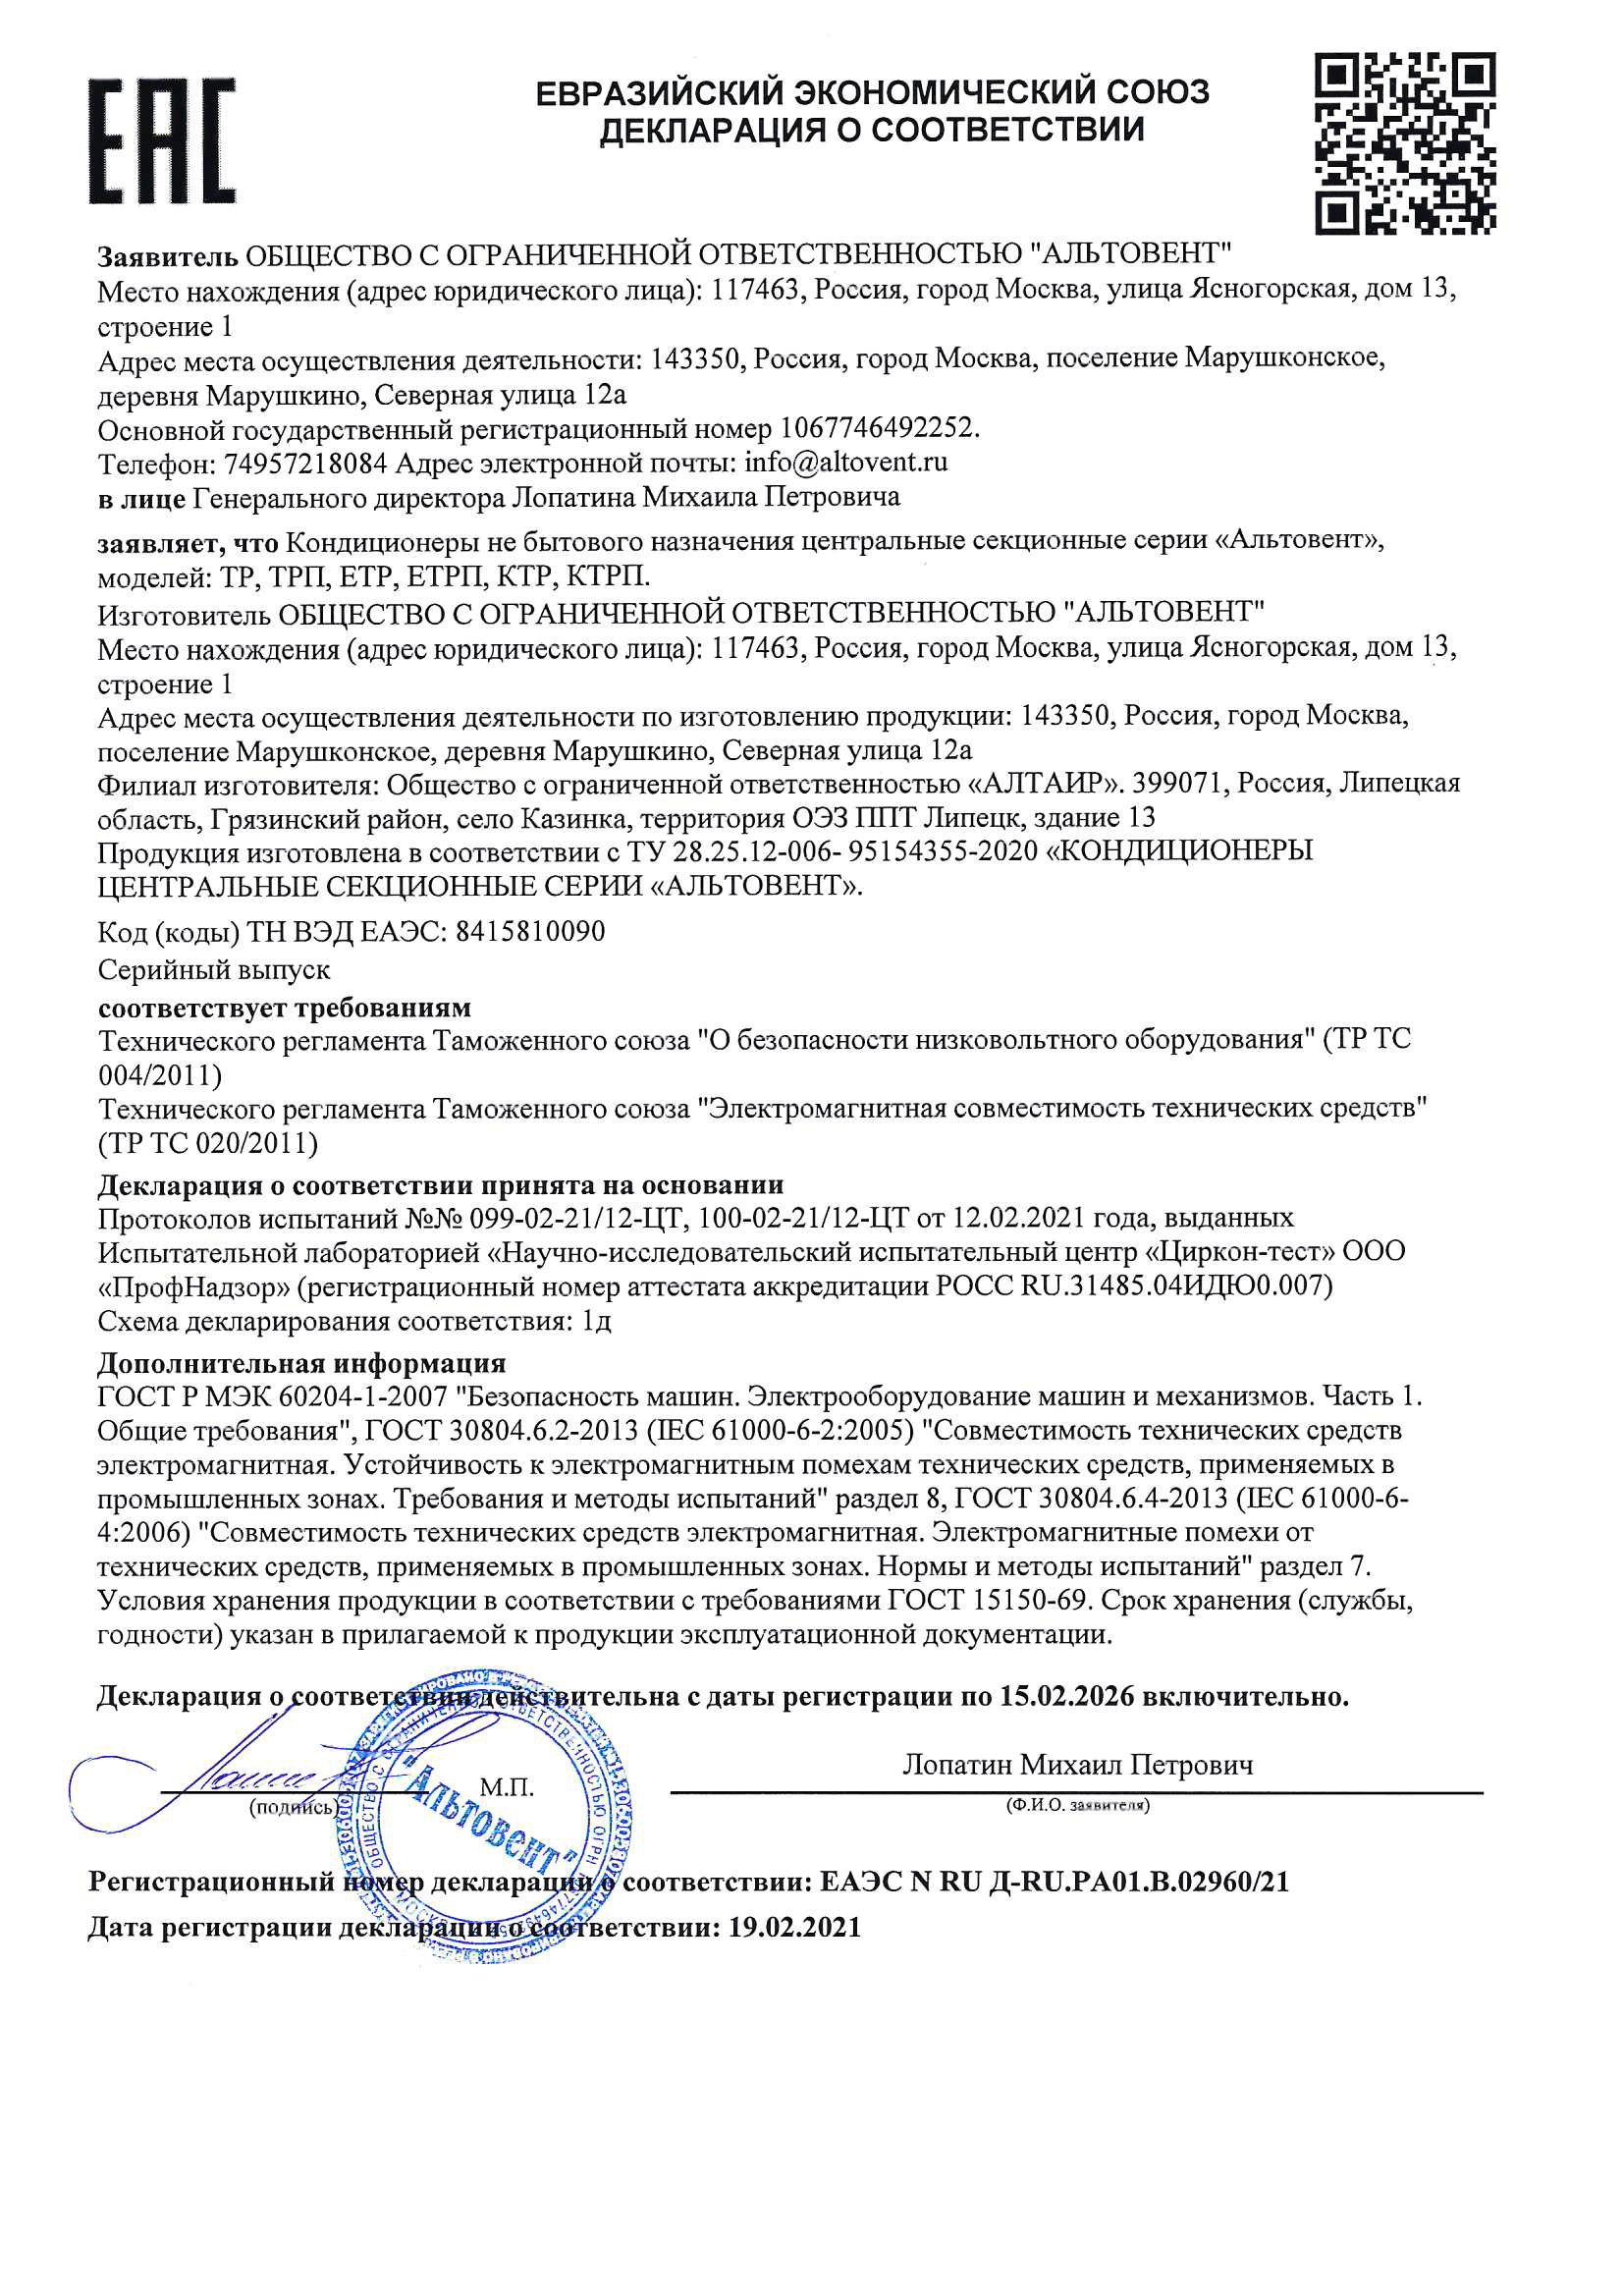 Declaratciia-o-sootvetstvii-do-15.02.2026_Signature-min